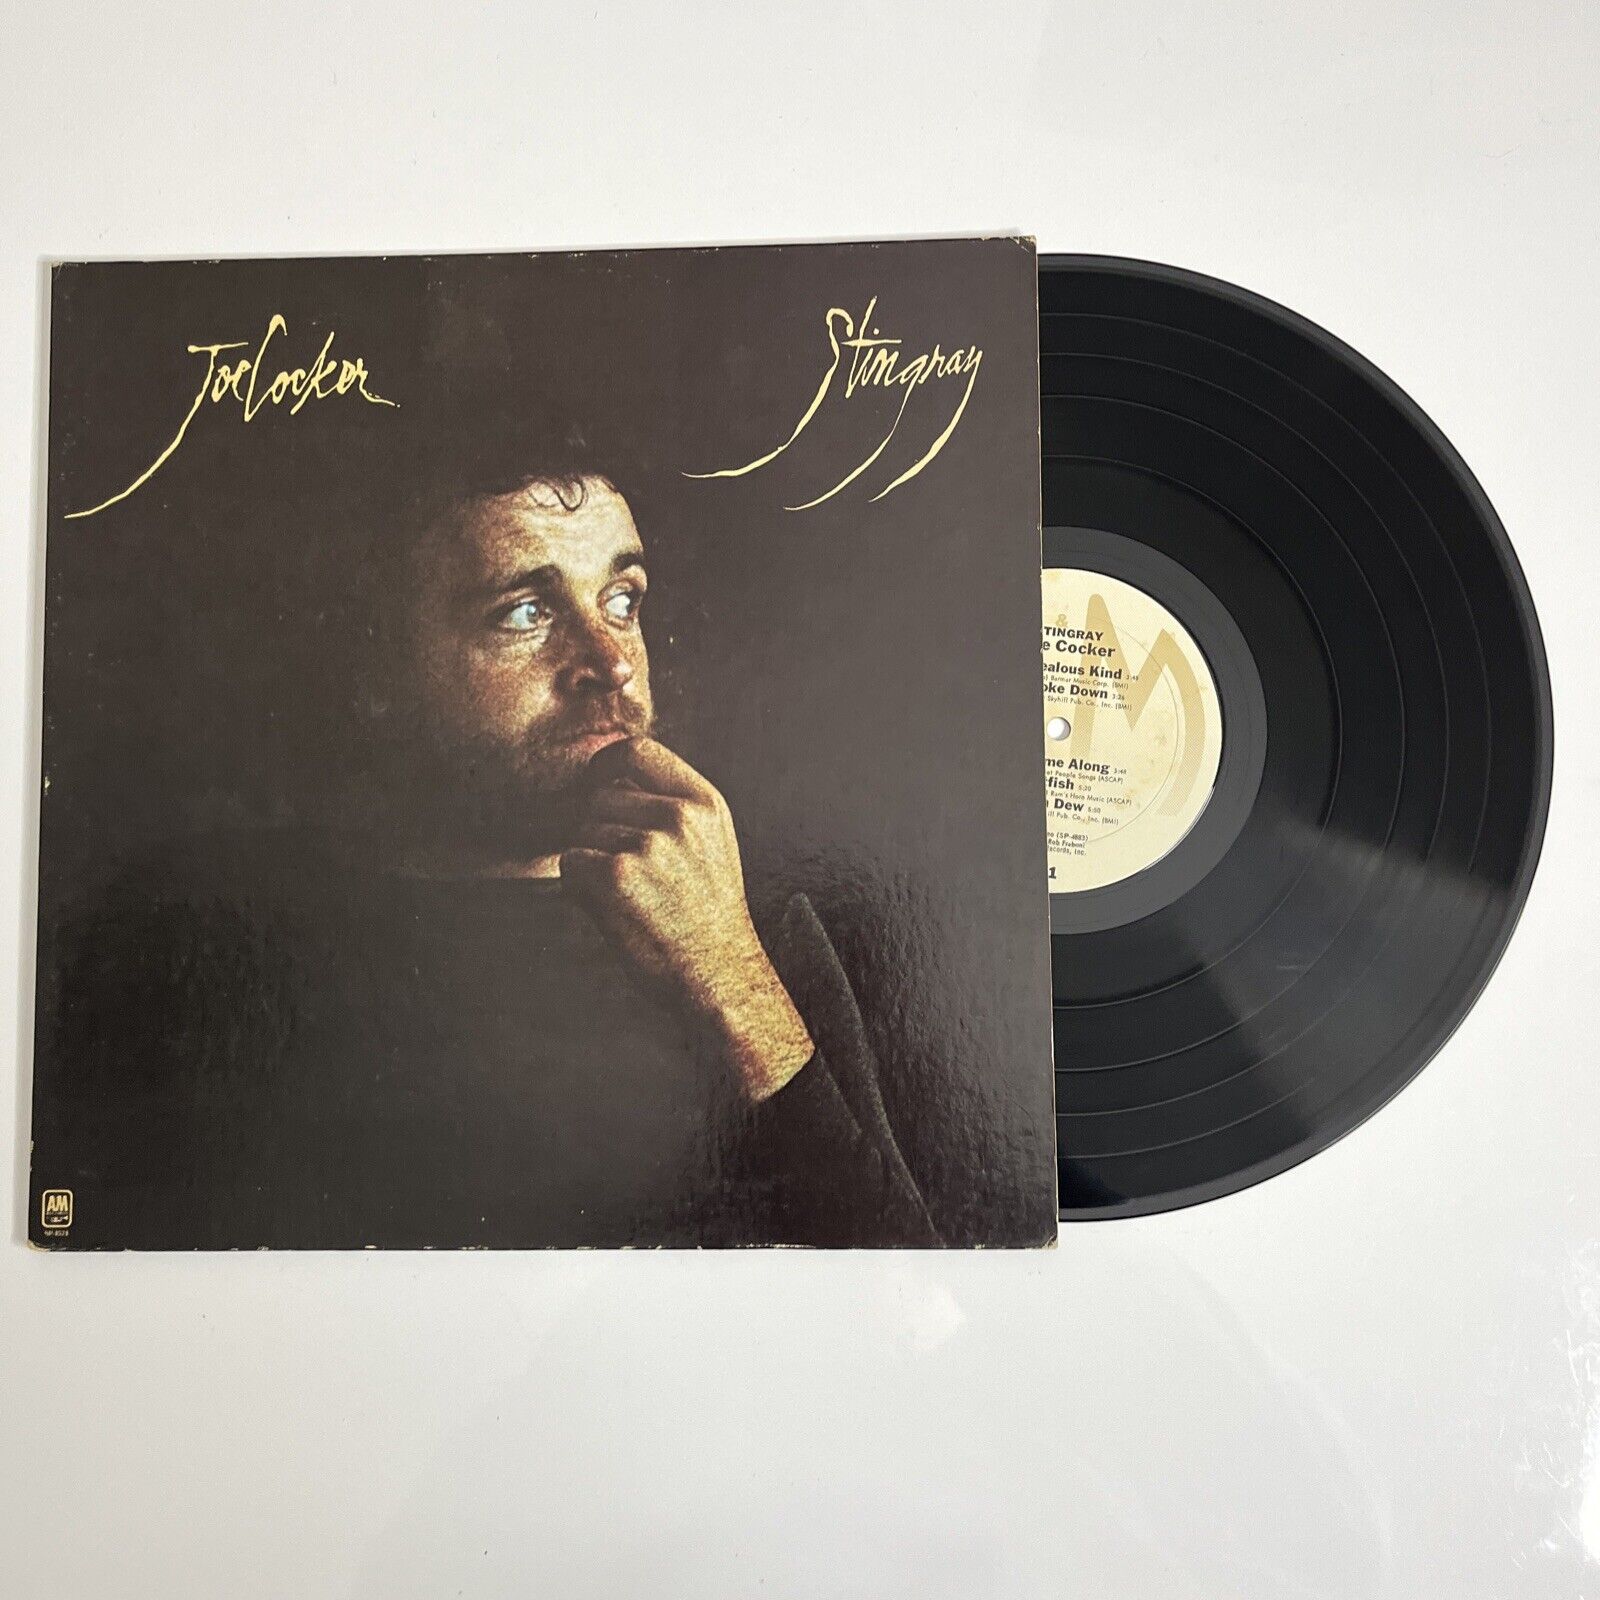 Joe Cocker Stingray Lp Gatefold 1976 Vinyl Record Sp 4574 Retro Unit 